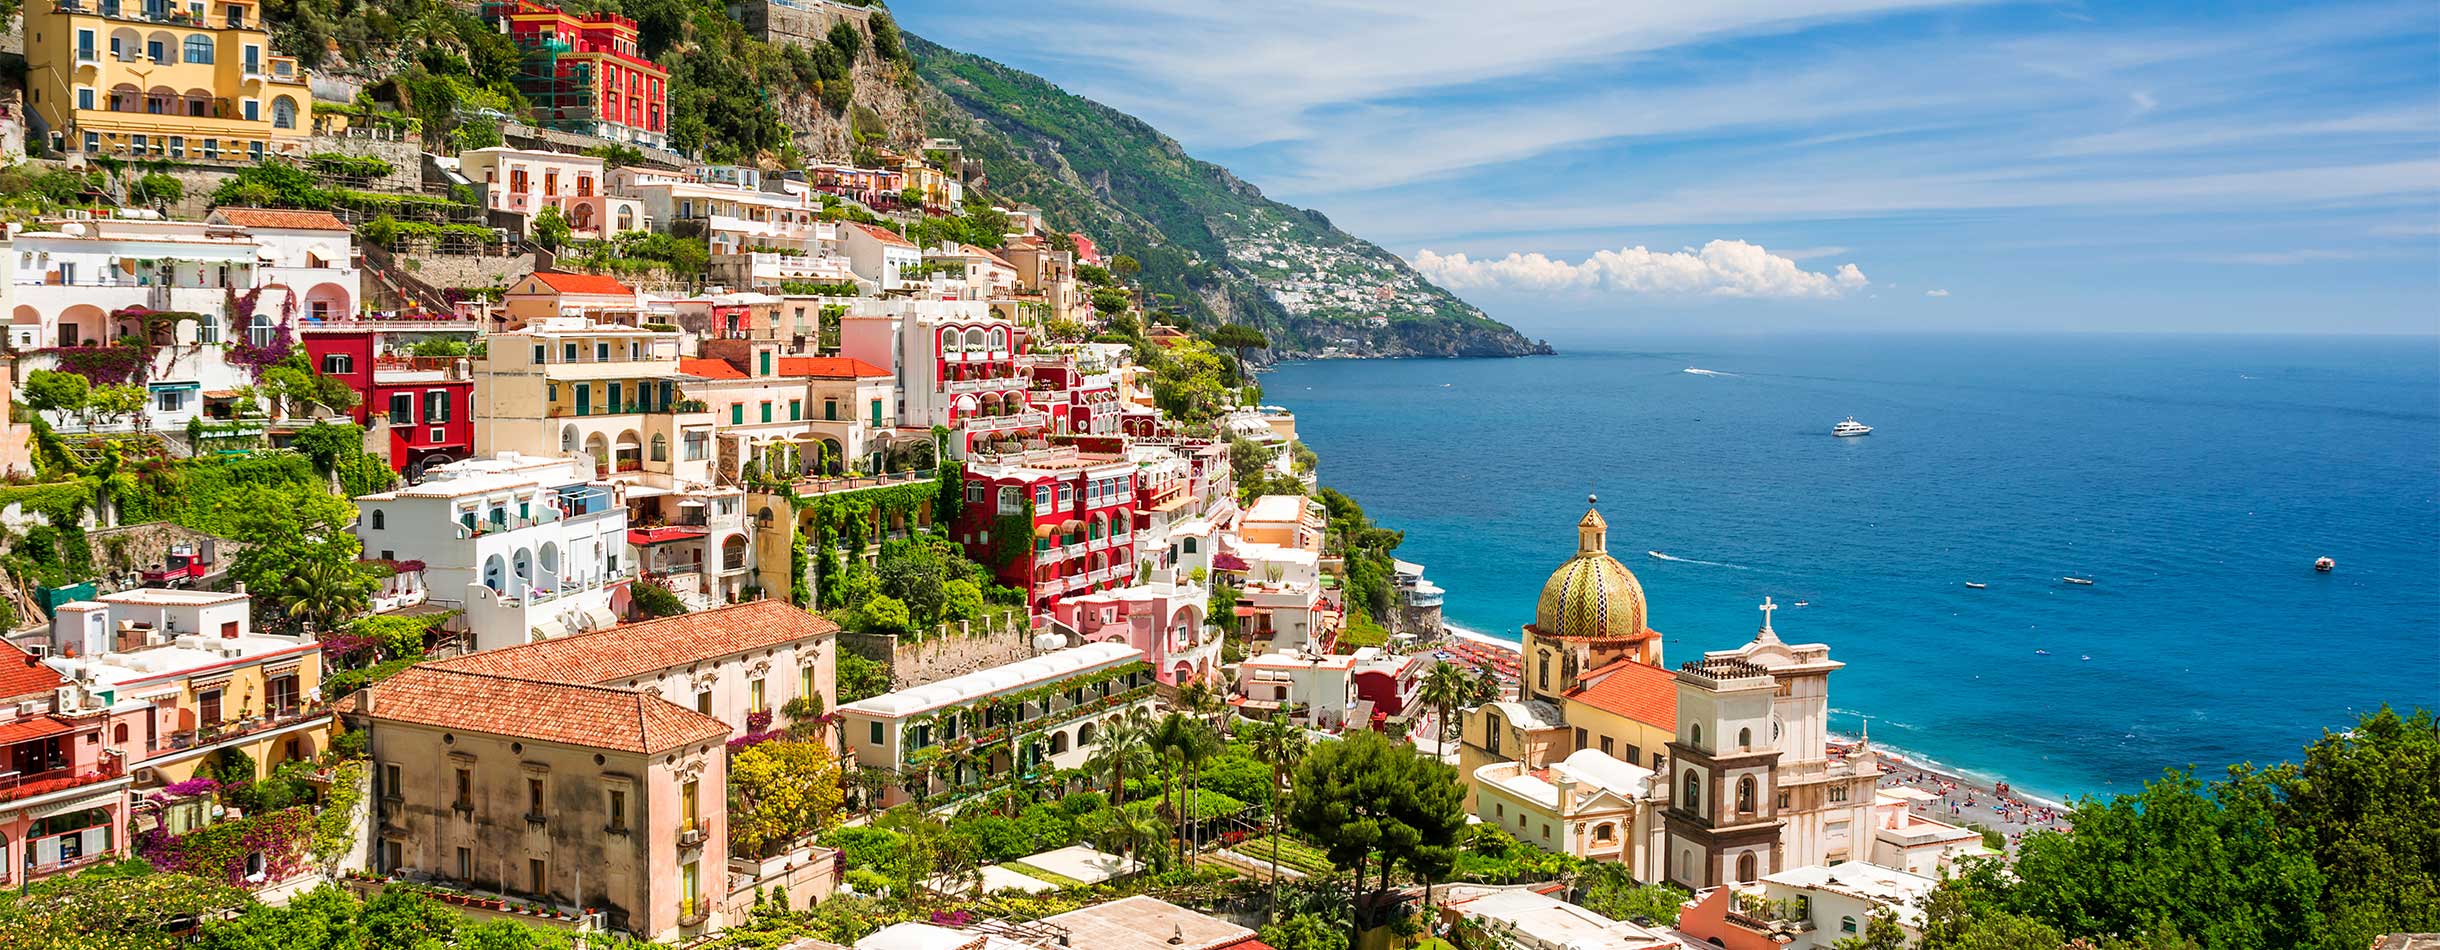 Beautiful views of the Amalfi coast